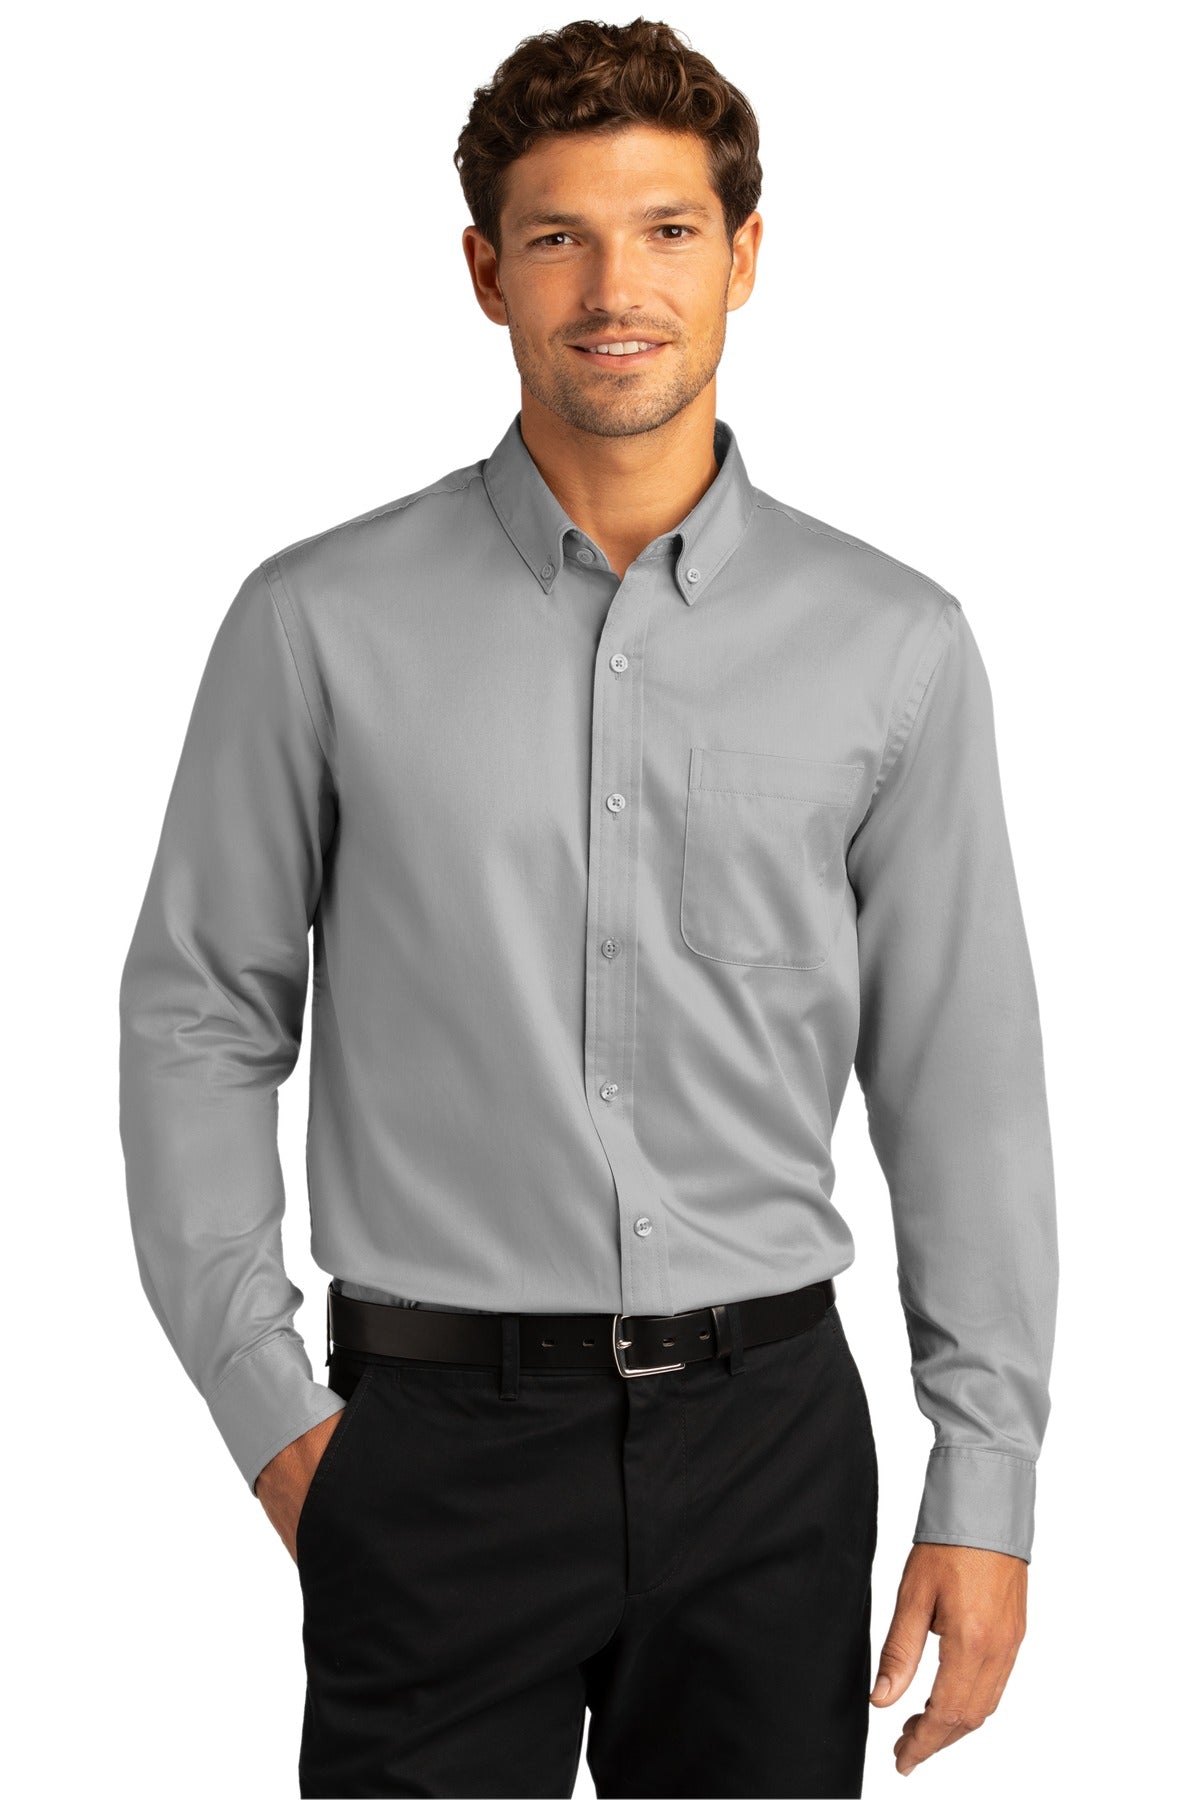 Port Authority® Long Sleeve SuperPro React™ Twill Shirt. W808